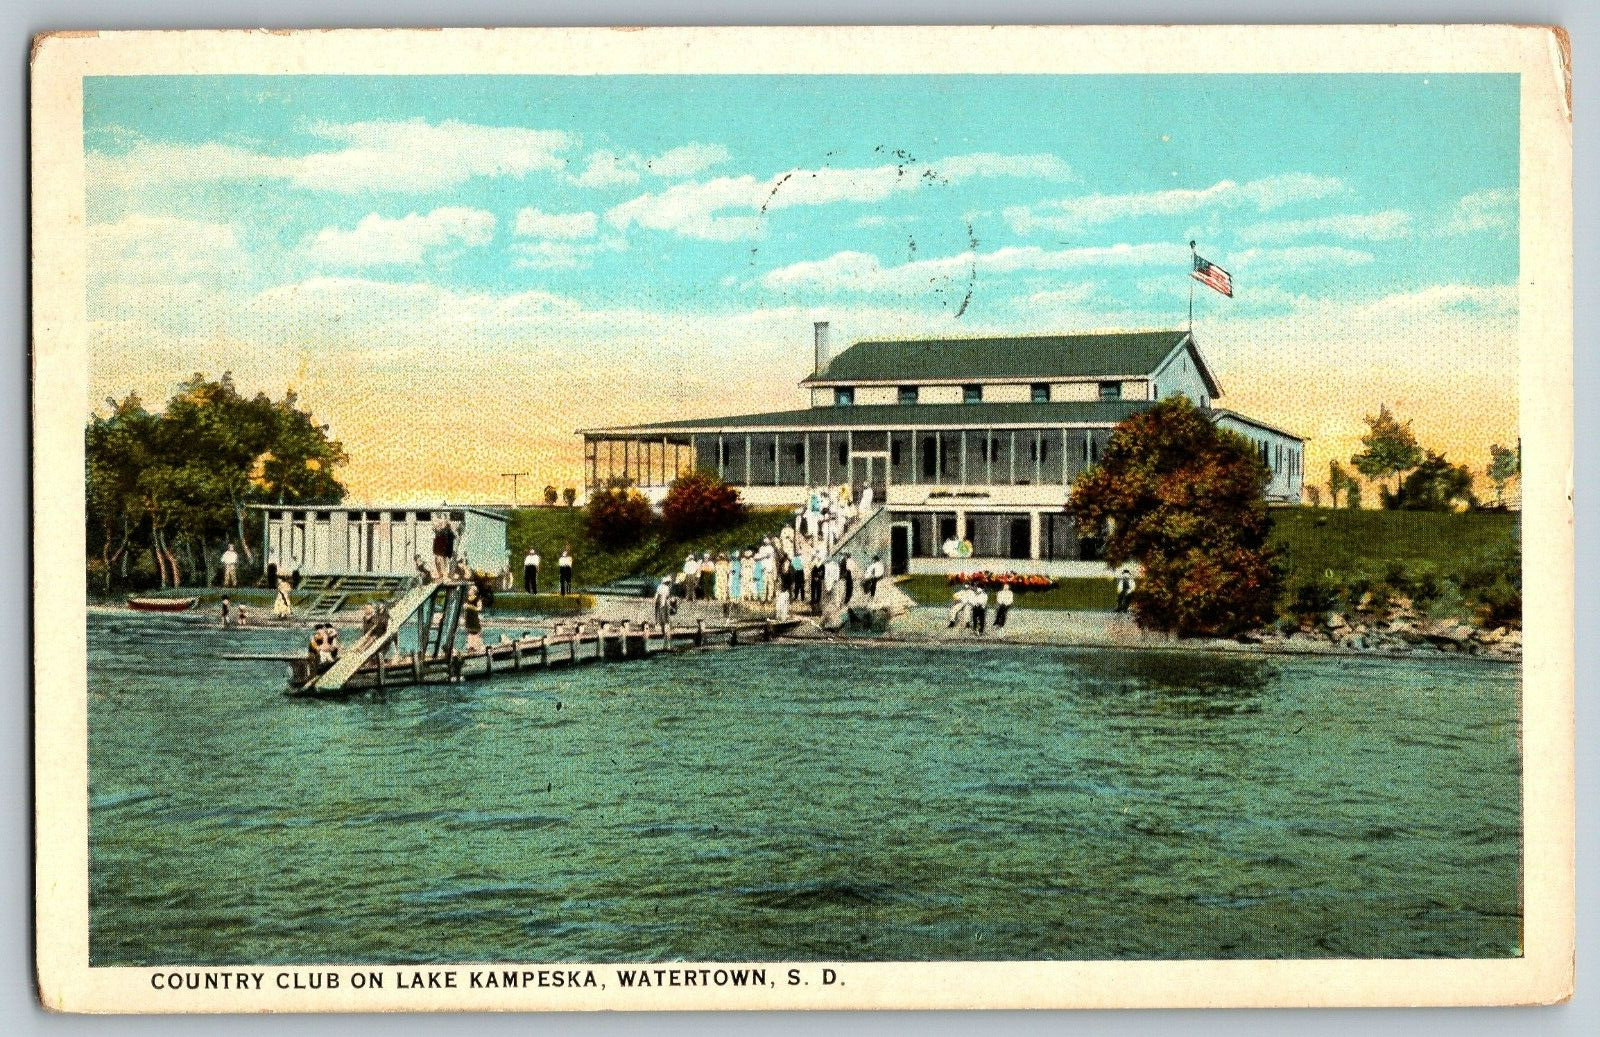 Watertown, South Dakota - Country Club on Lake Kampeska - Vintage Postcard